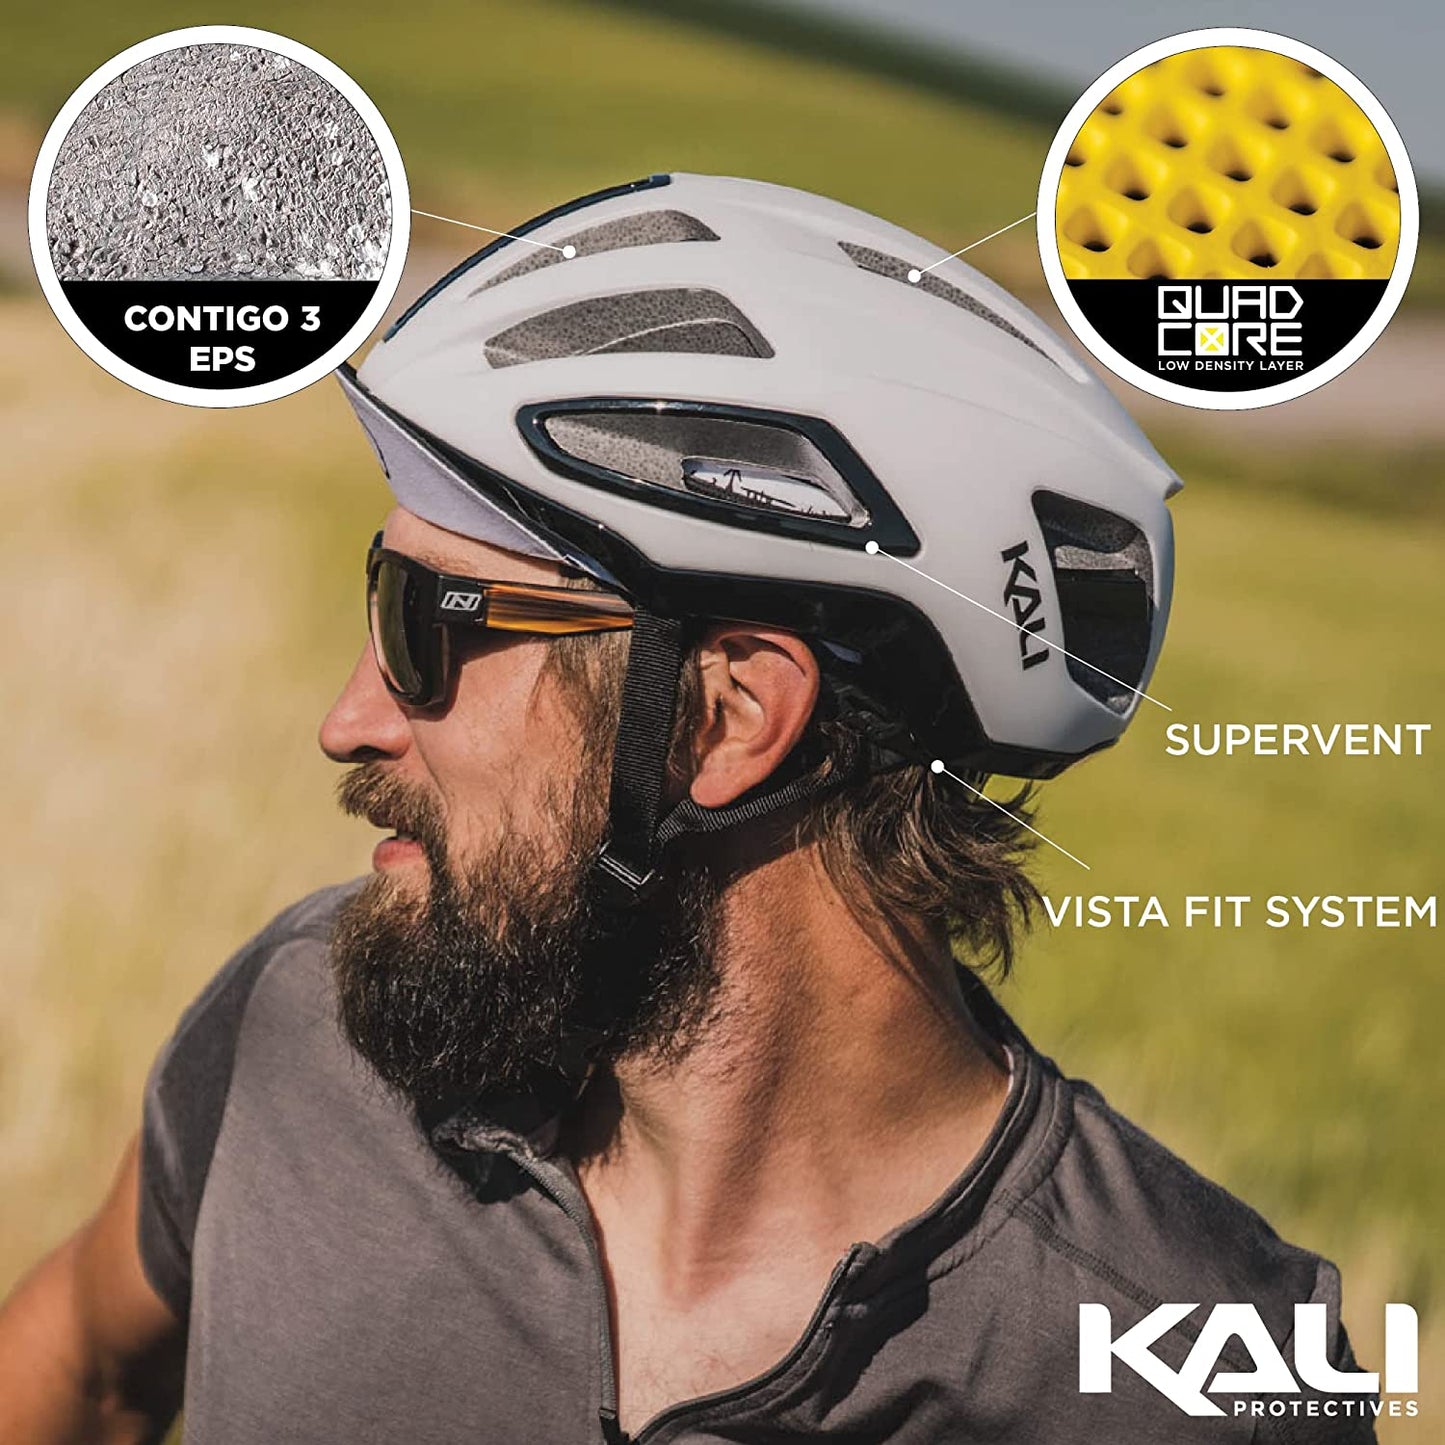 UNO Bicycle Helmet - Solid Matte White / Black